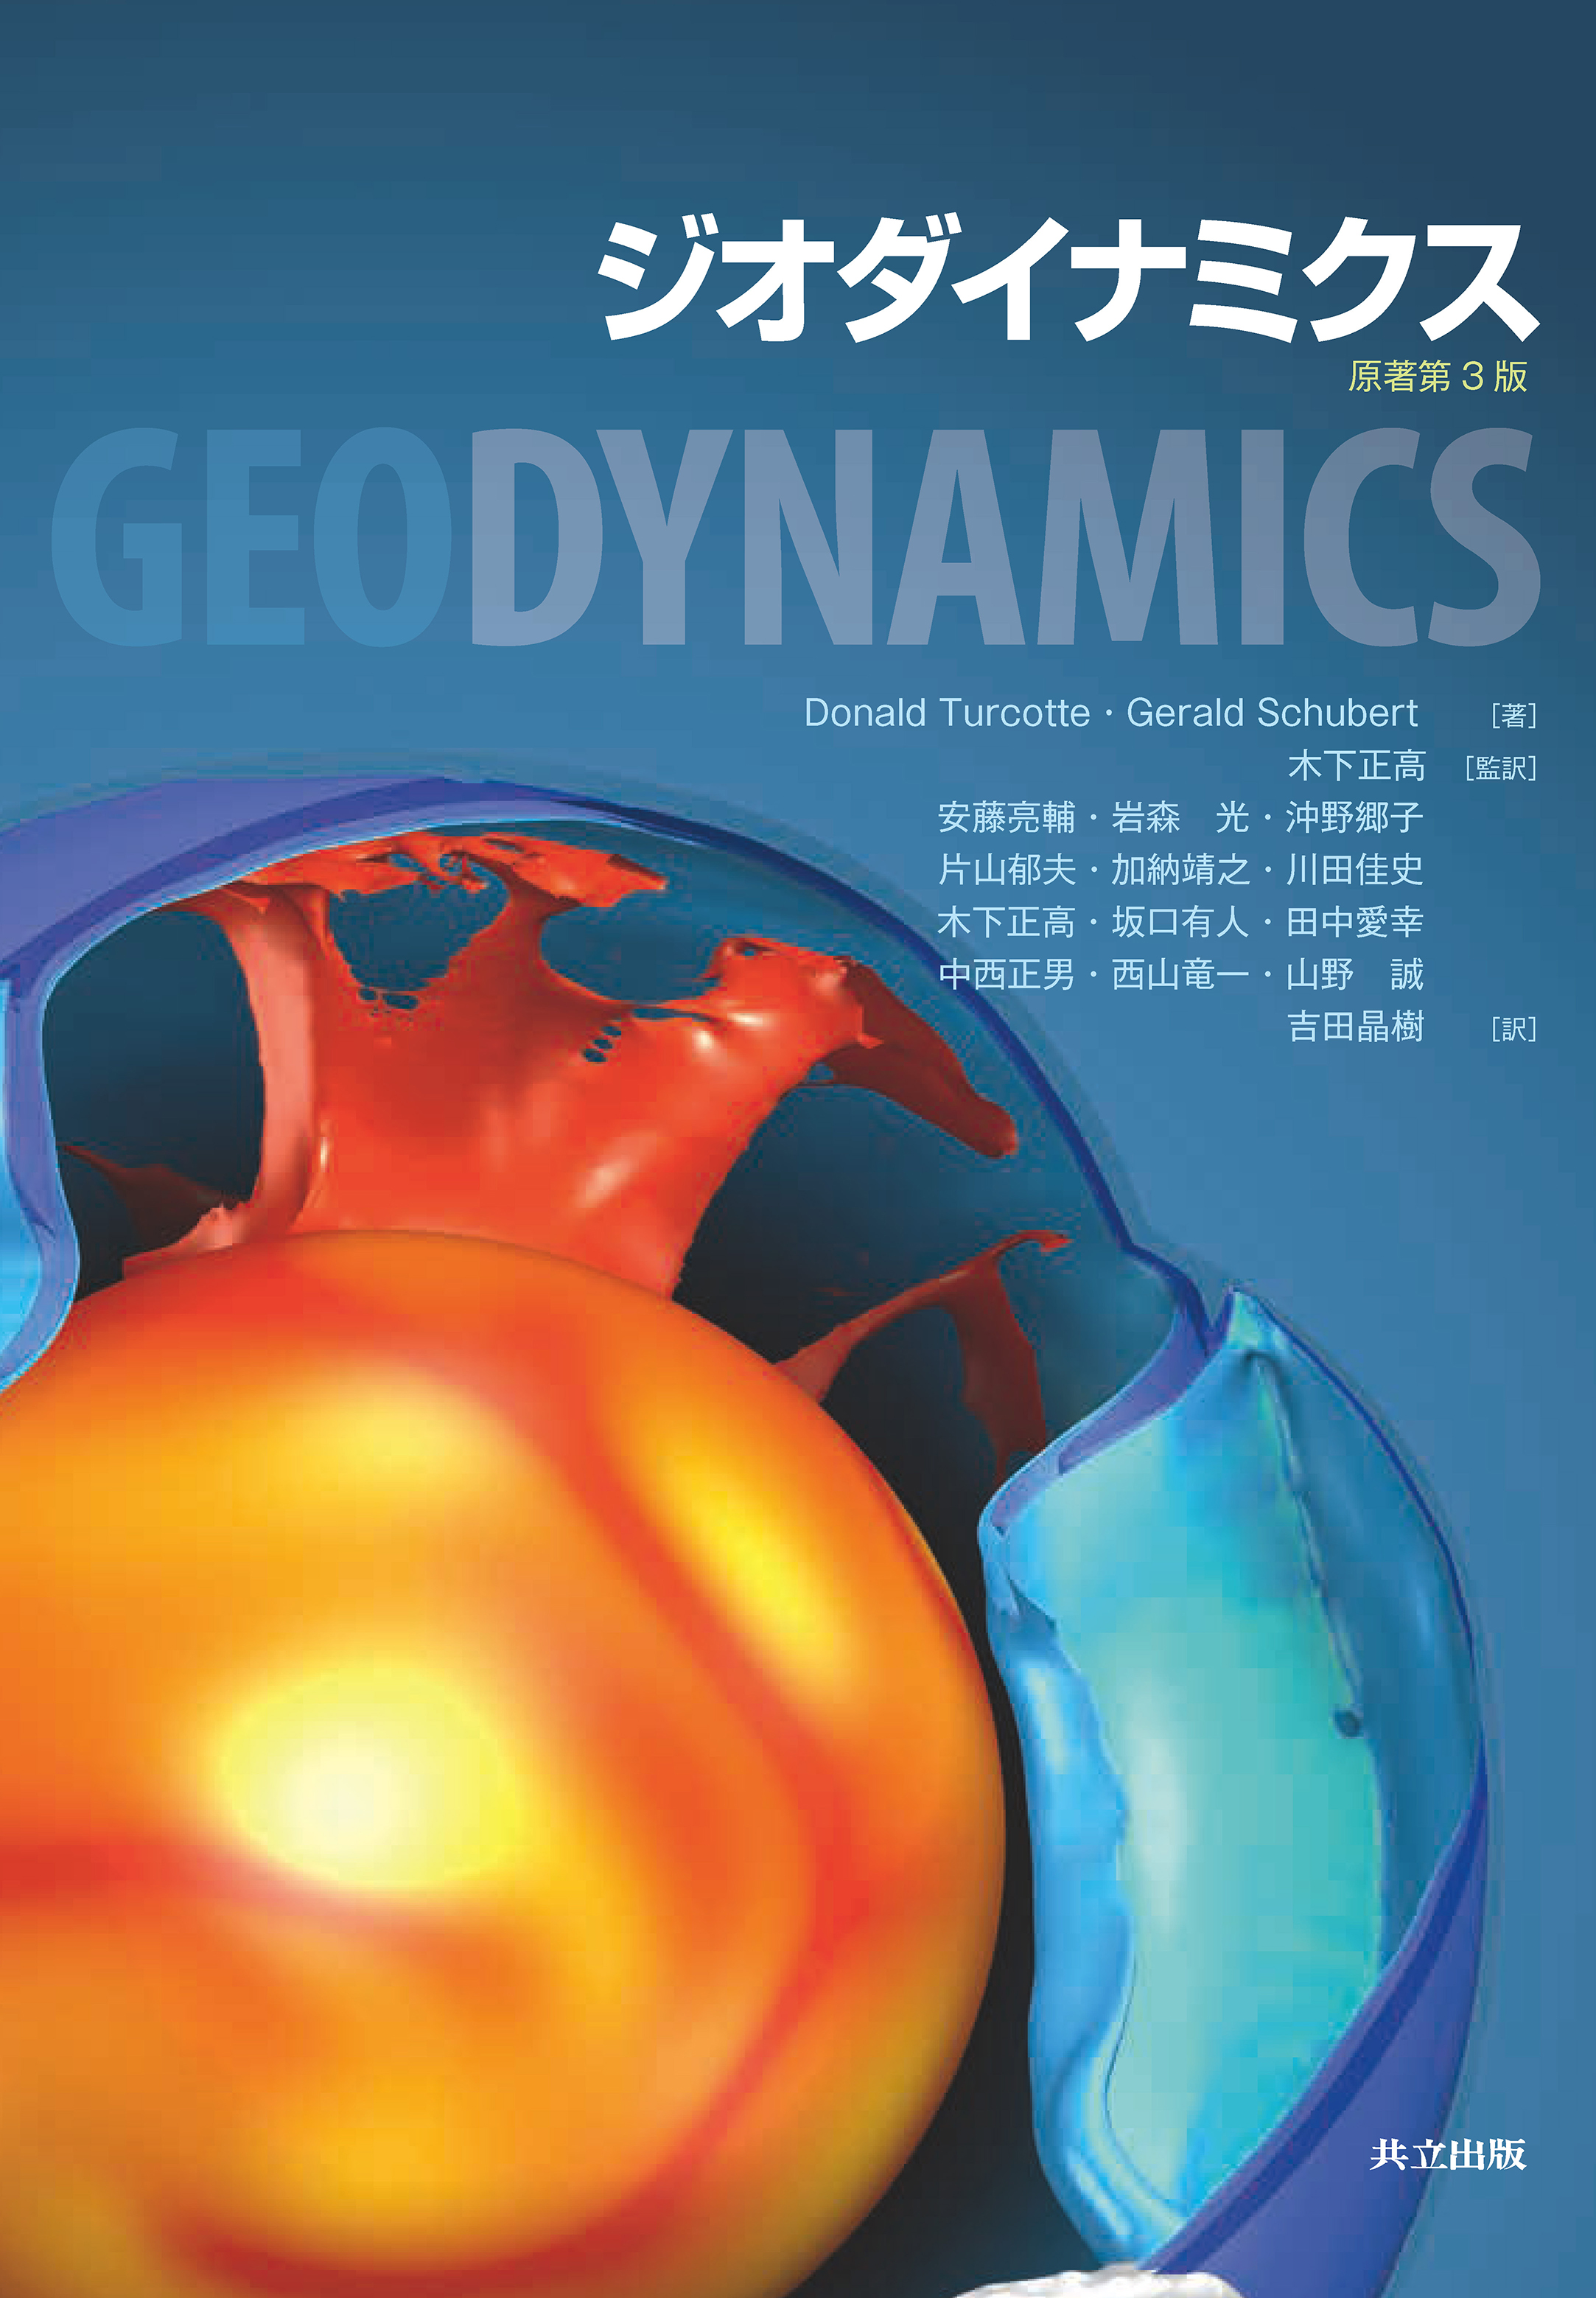 orange sphere image on blue cover